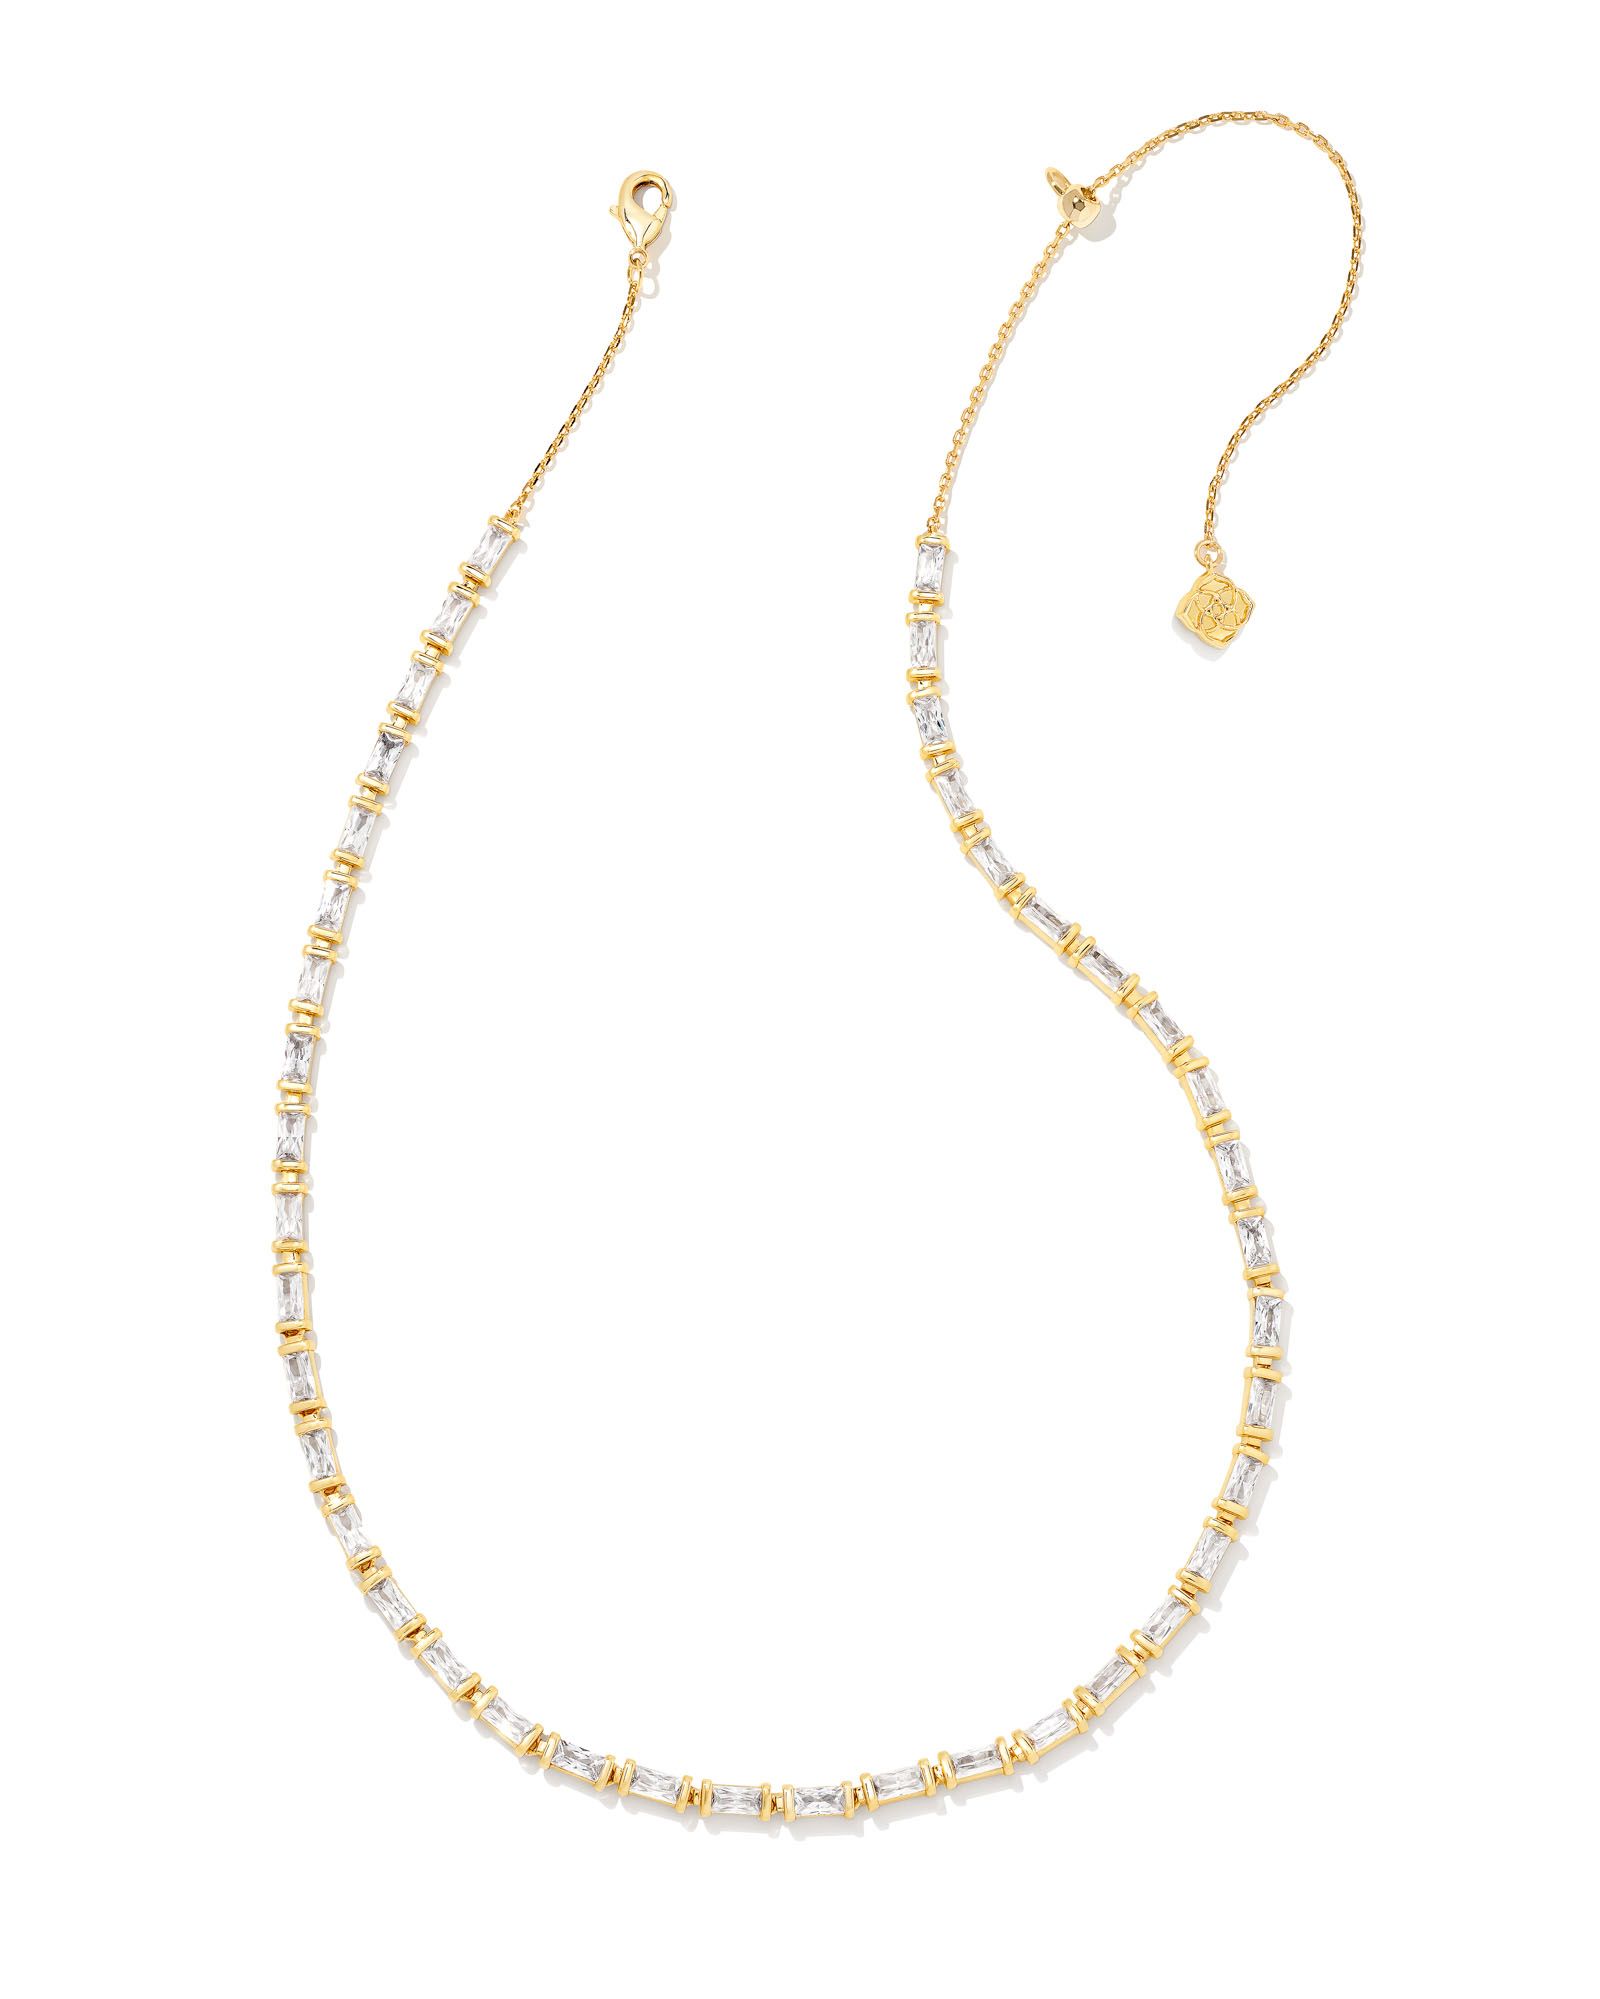 Juliette Gold Strand Necklace in White Crystal | Kendra Scott | Kendra Scott